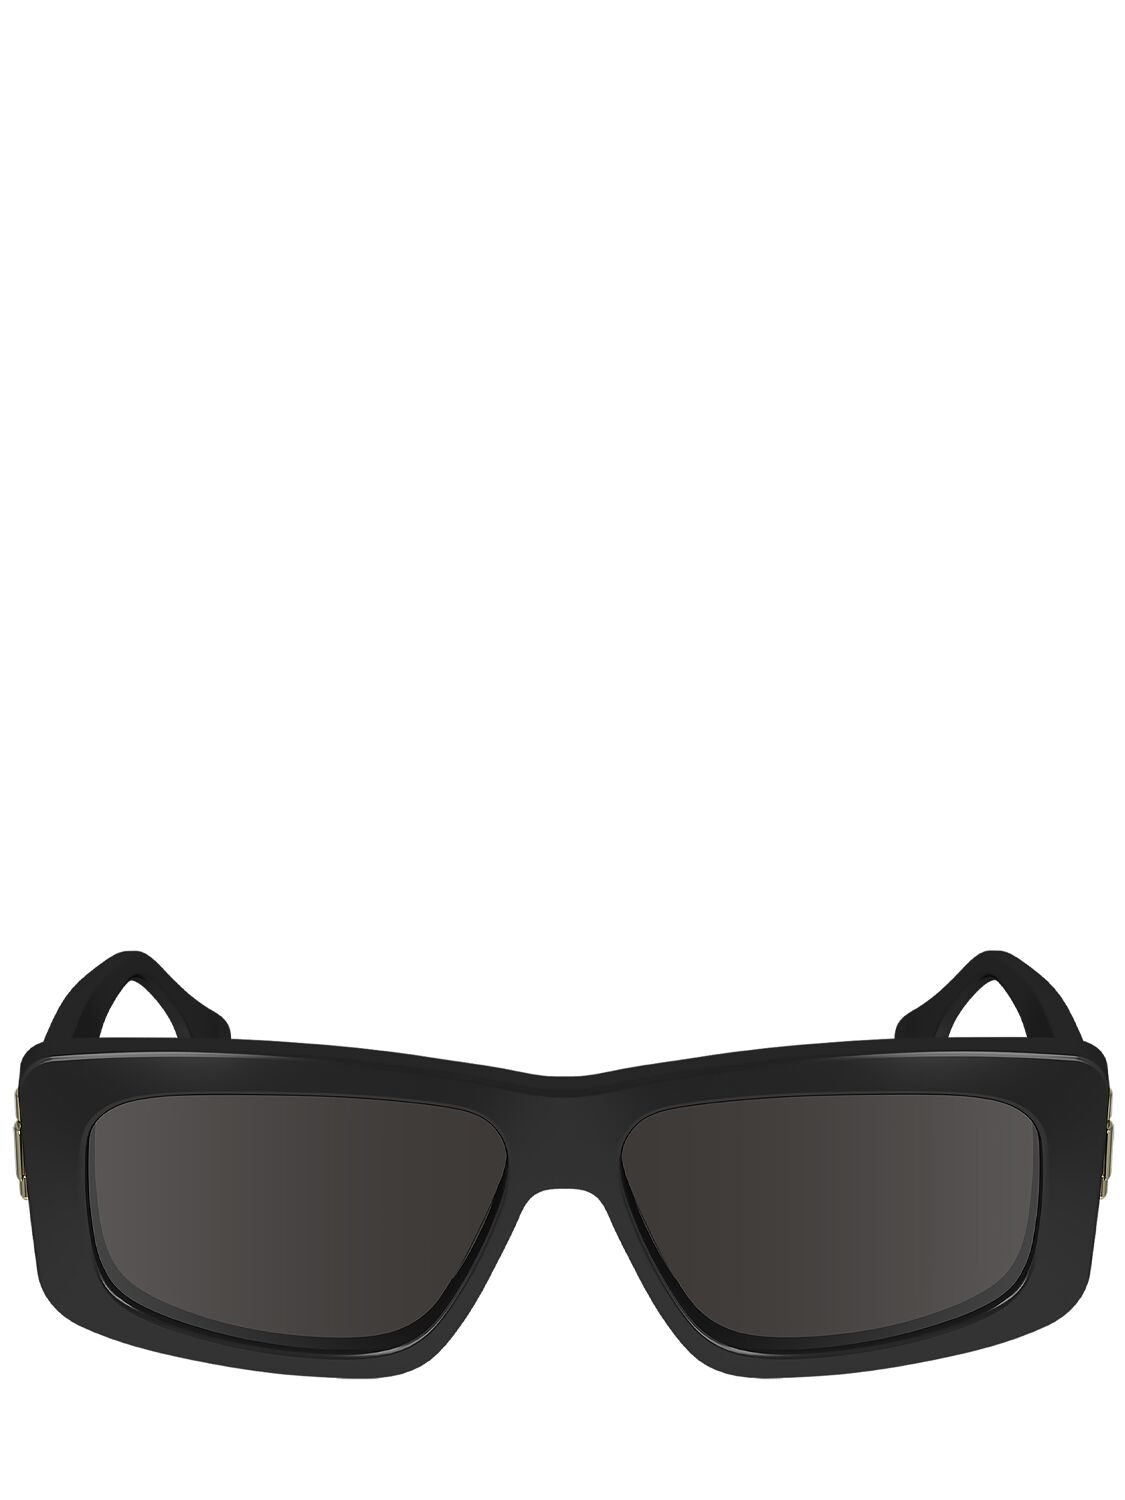 Victoria Beckham Vb Chain Acetate Sunglasses In Black